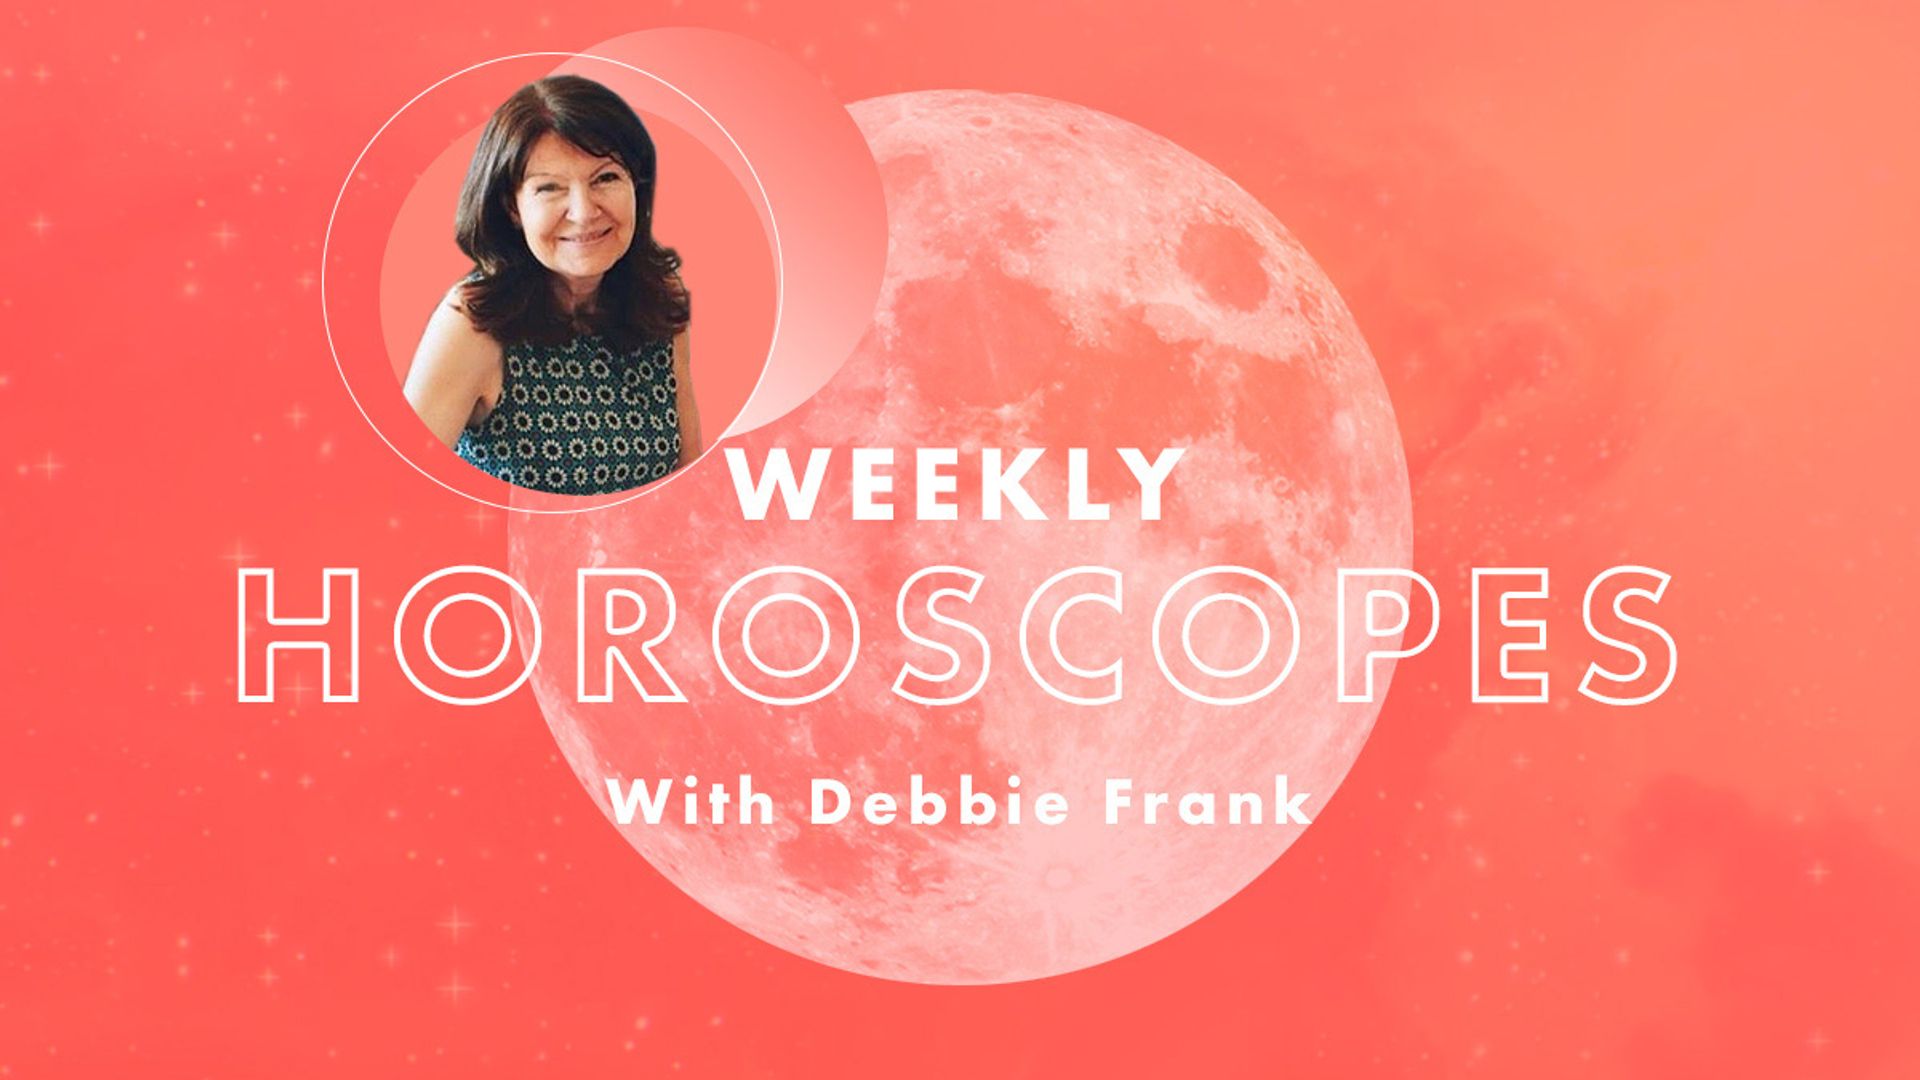 debbie-frank-horoscope